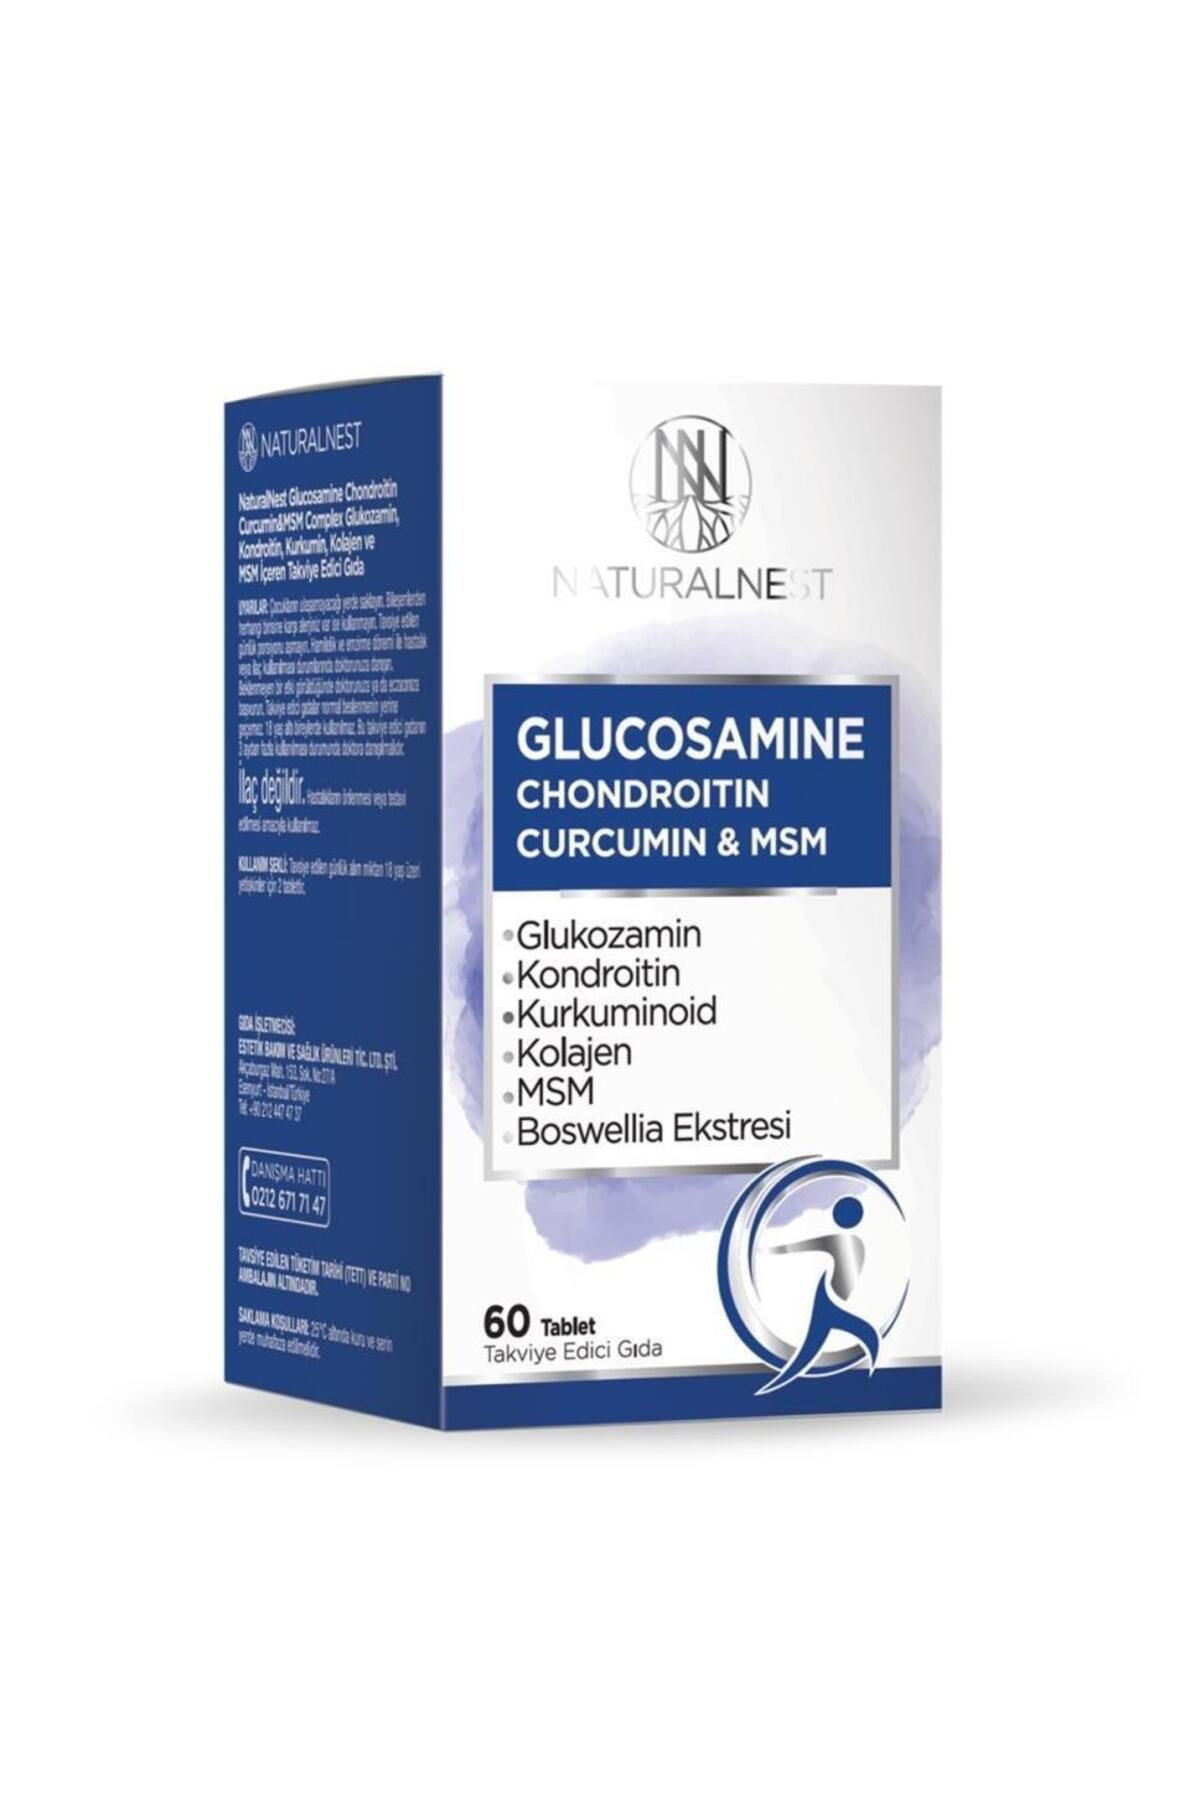 Natural Nest Glucosamine Chondroitin Curcumin & Msm Complex 60 Tablet